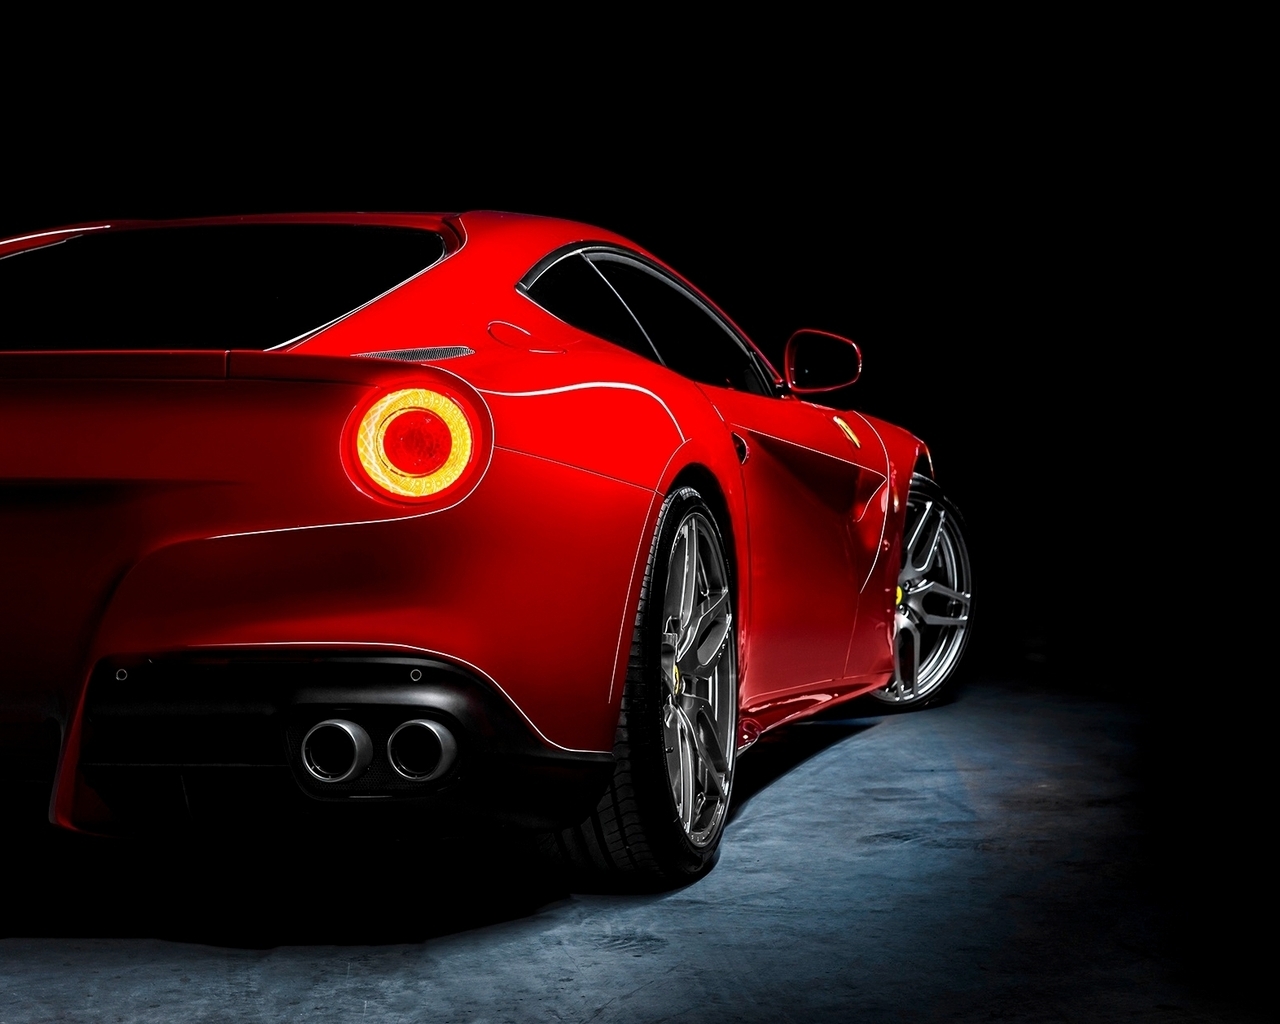 Red Ferrari F12 Berlinetta for 1280 x 1024 resolution